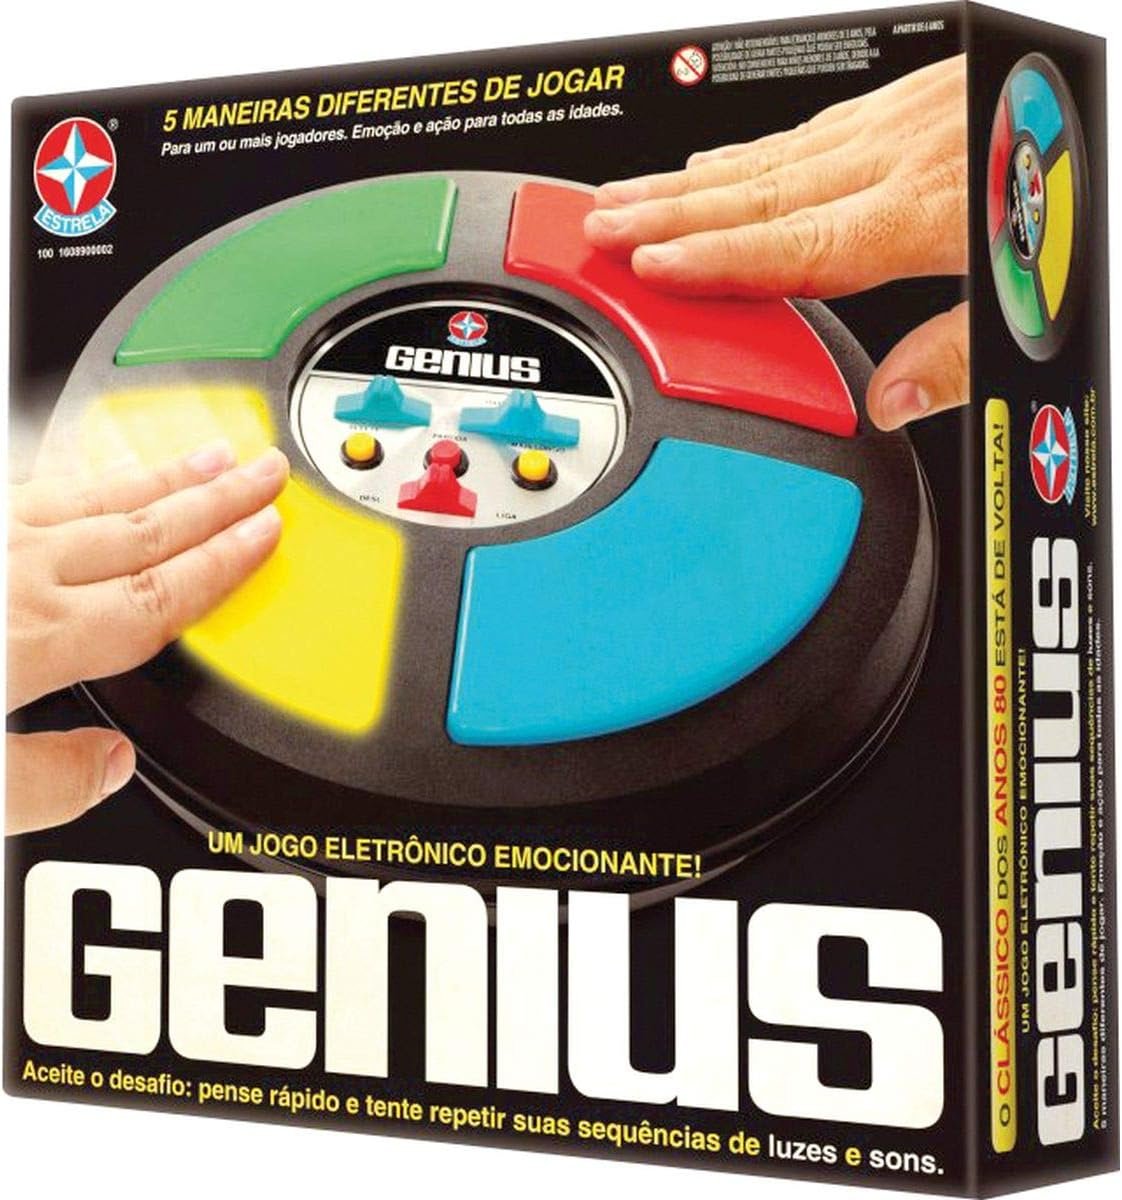 Jogo Genius - Estrela